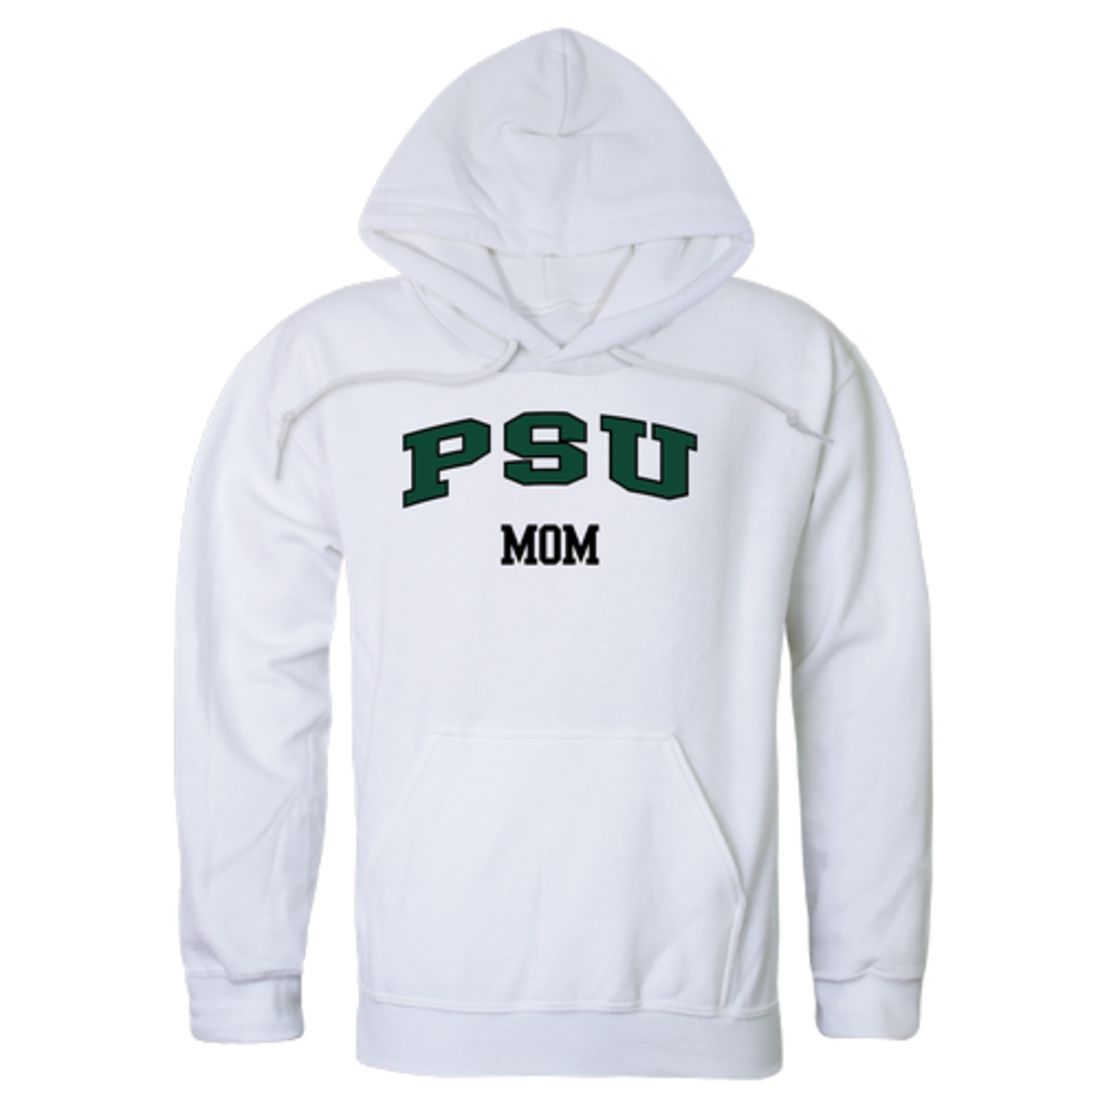 PSU Portland State University Vikings Mom Fleece Hoodie Sweatshirts Forest-Campus-Wardrobe